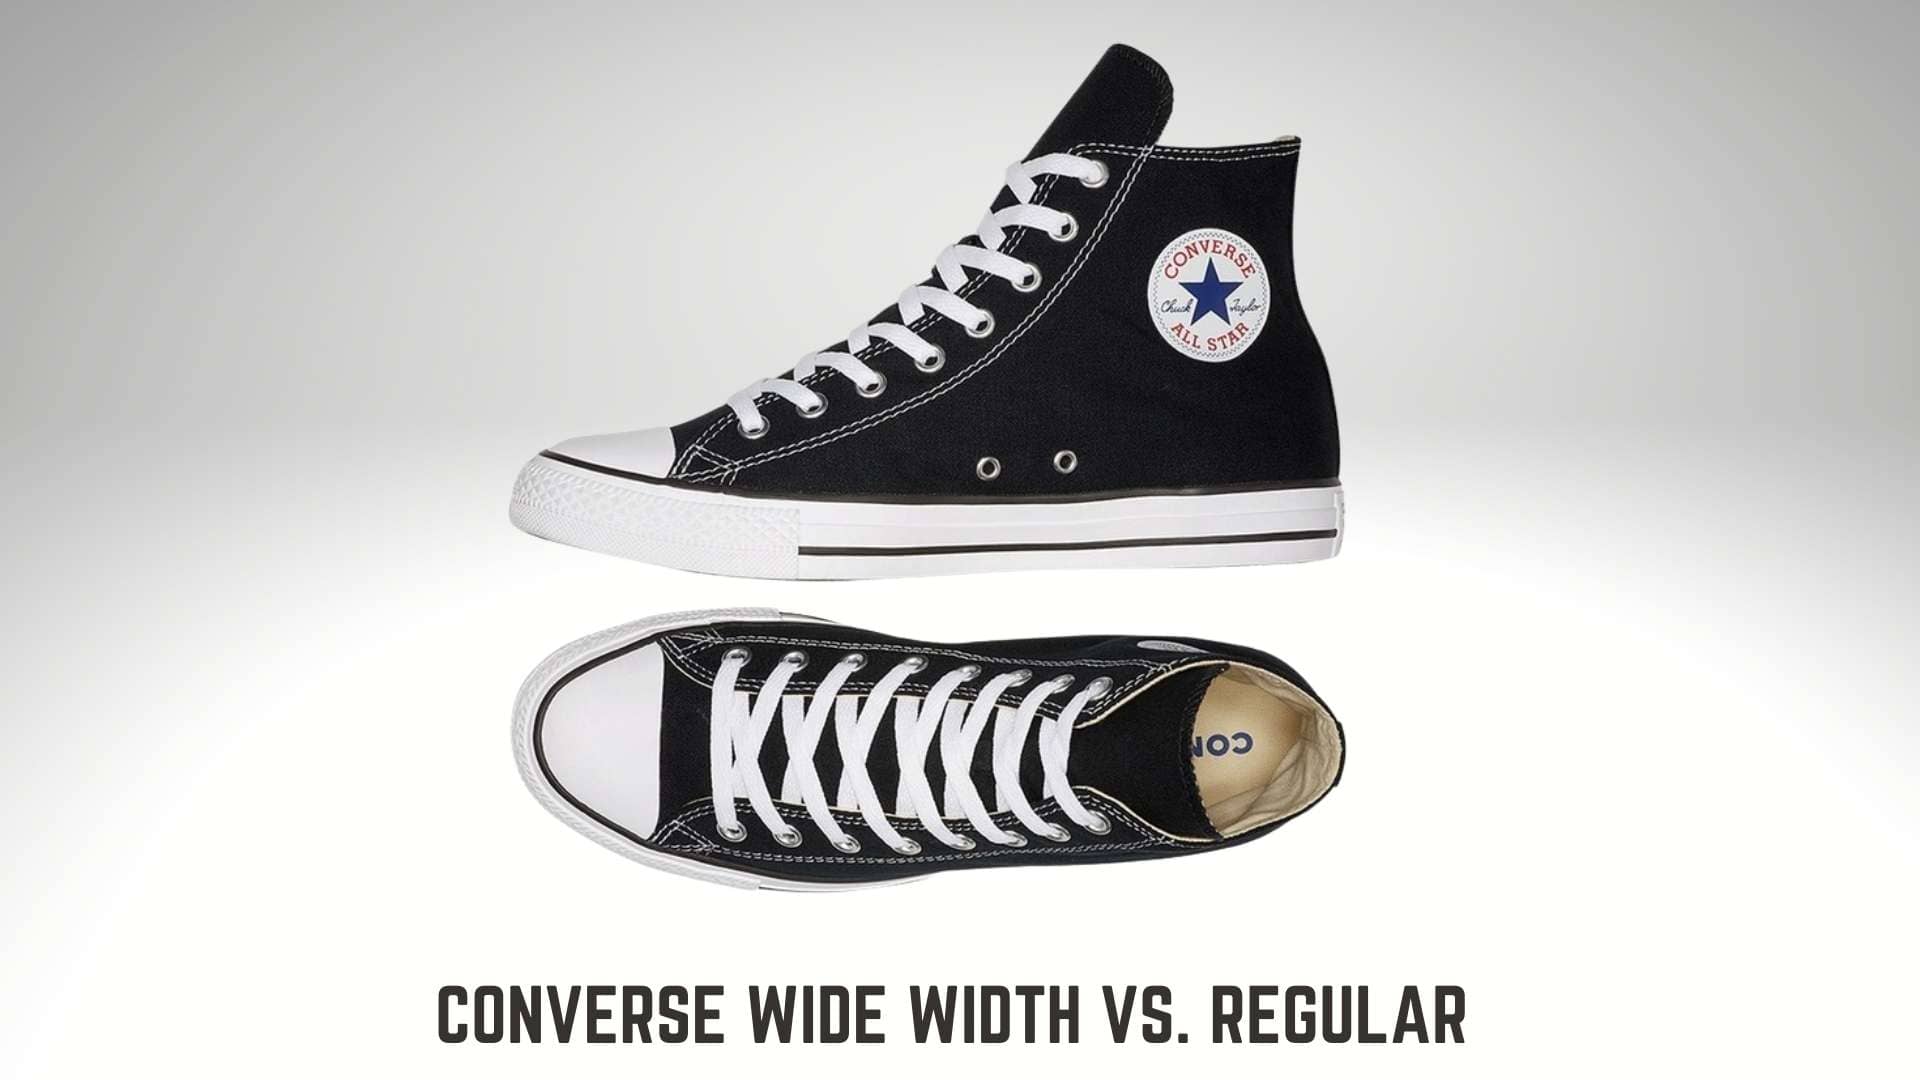 Converse Wide Width vs. Regular